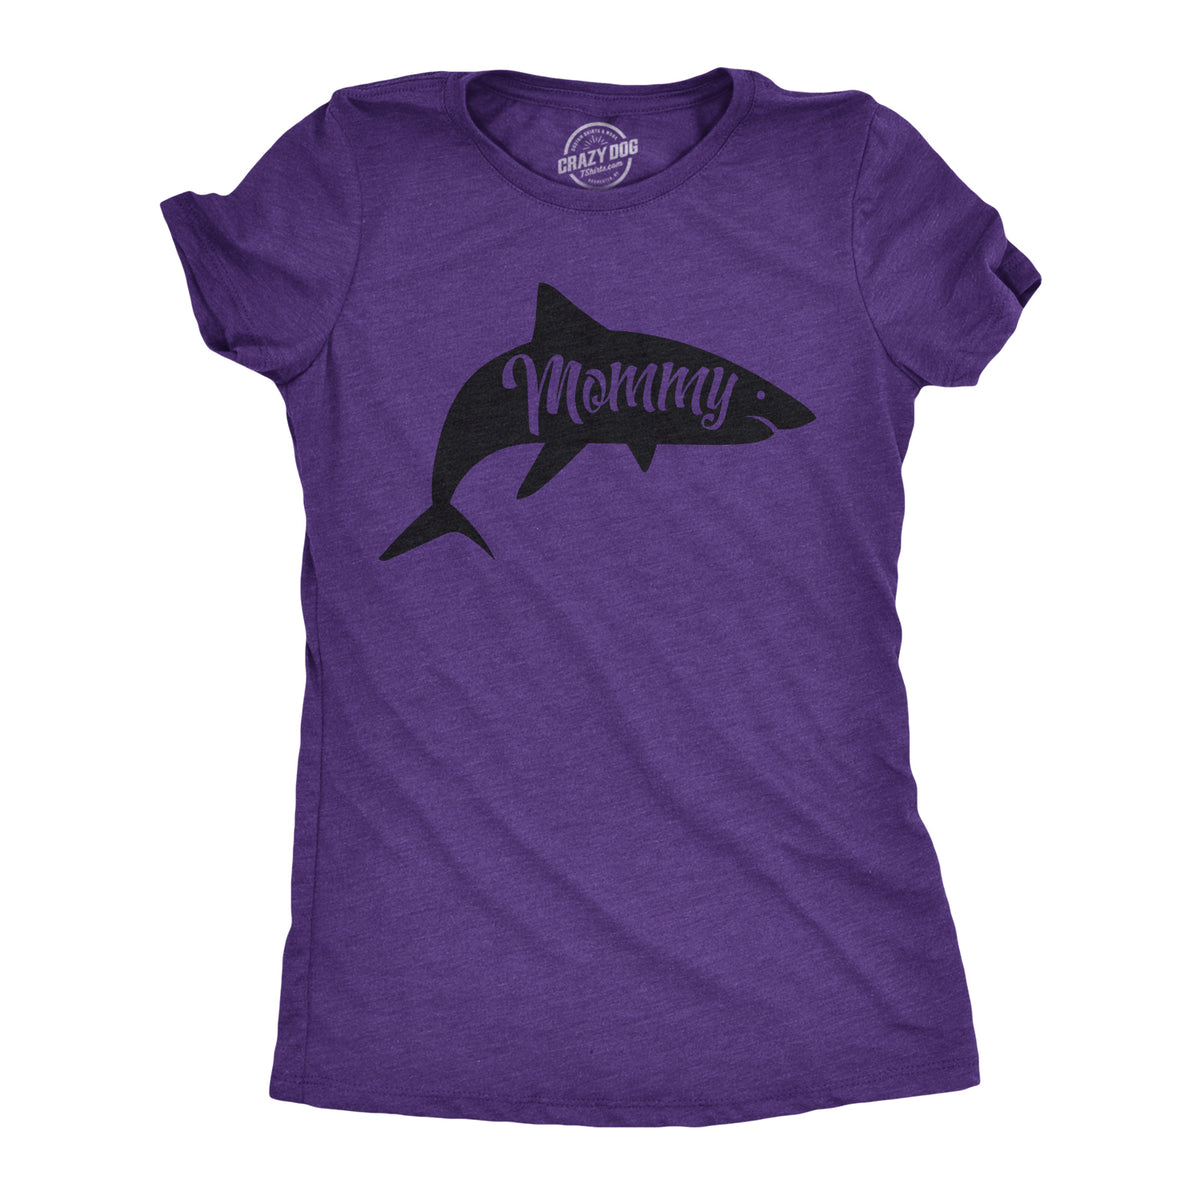 Funny Dark Heather Grey - Mommy Shark Mommy Shark Womens T Shirt Nerdy Mother&#39;s Day Shark Week Tee